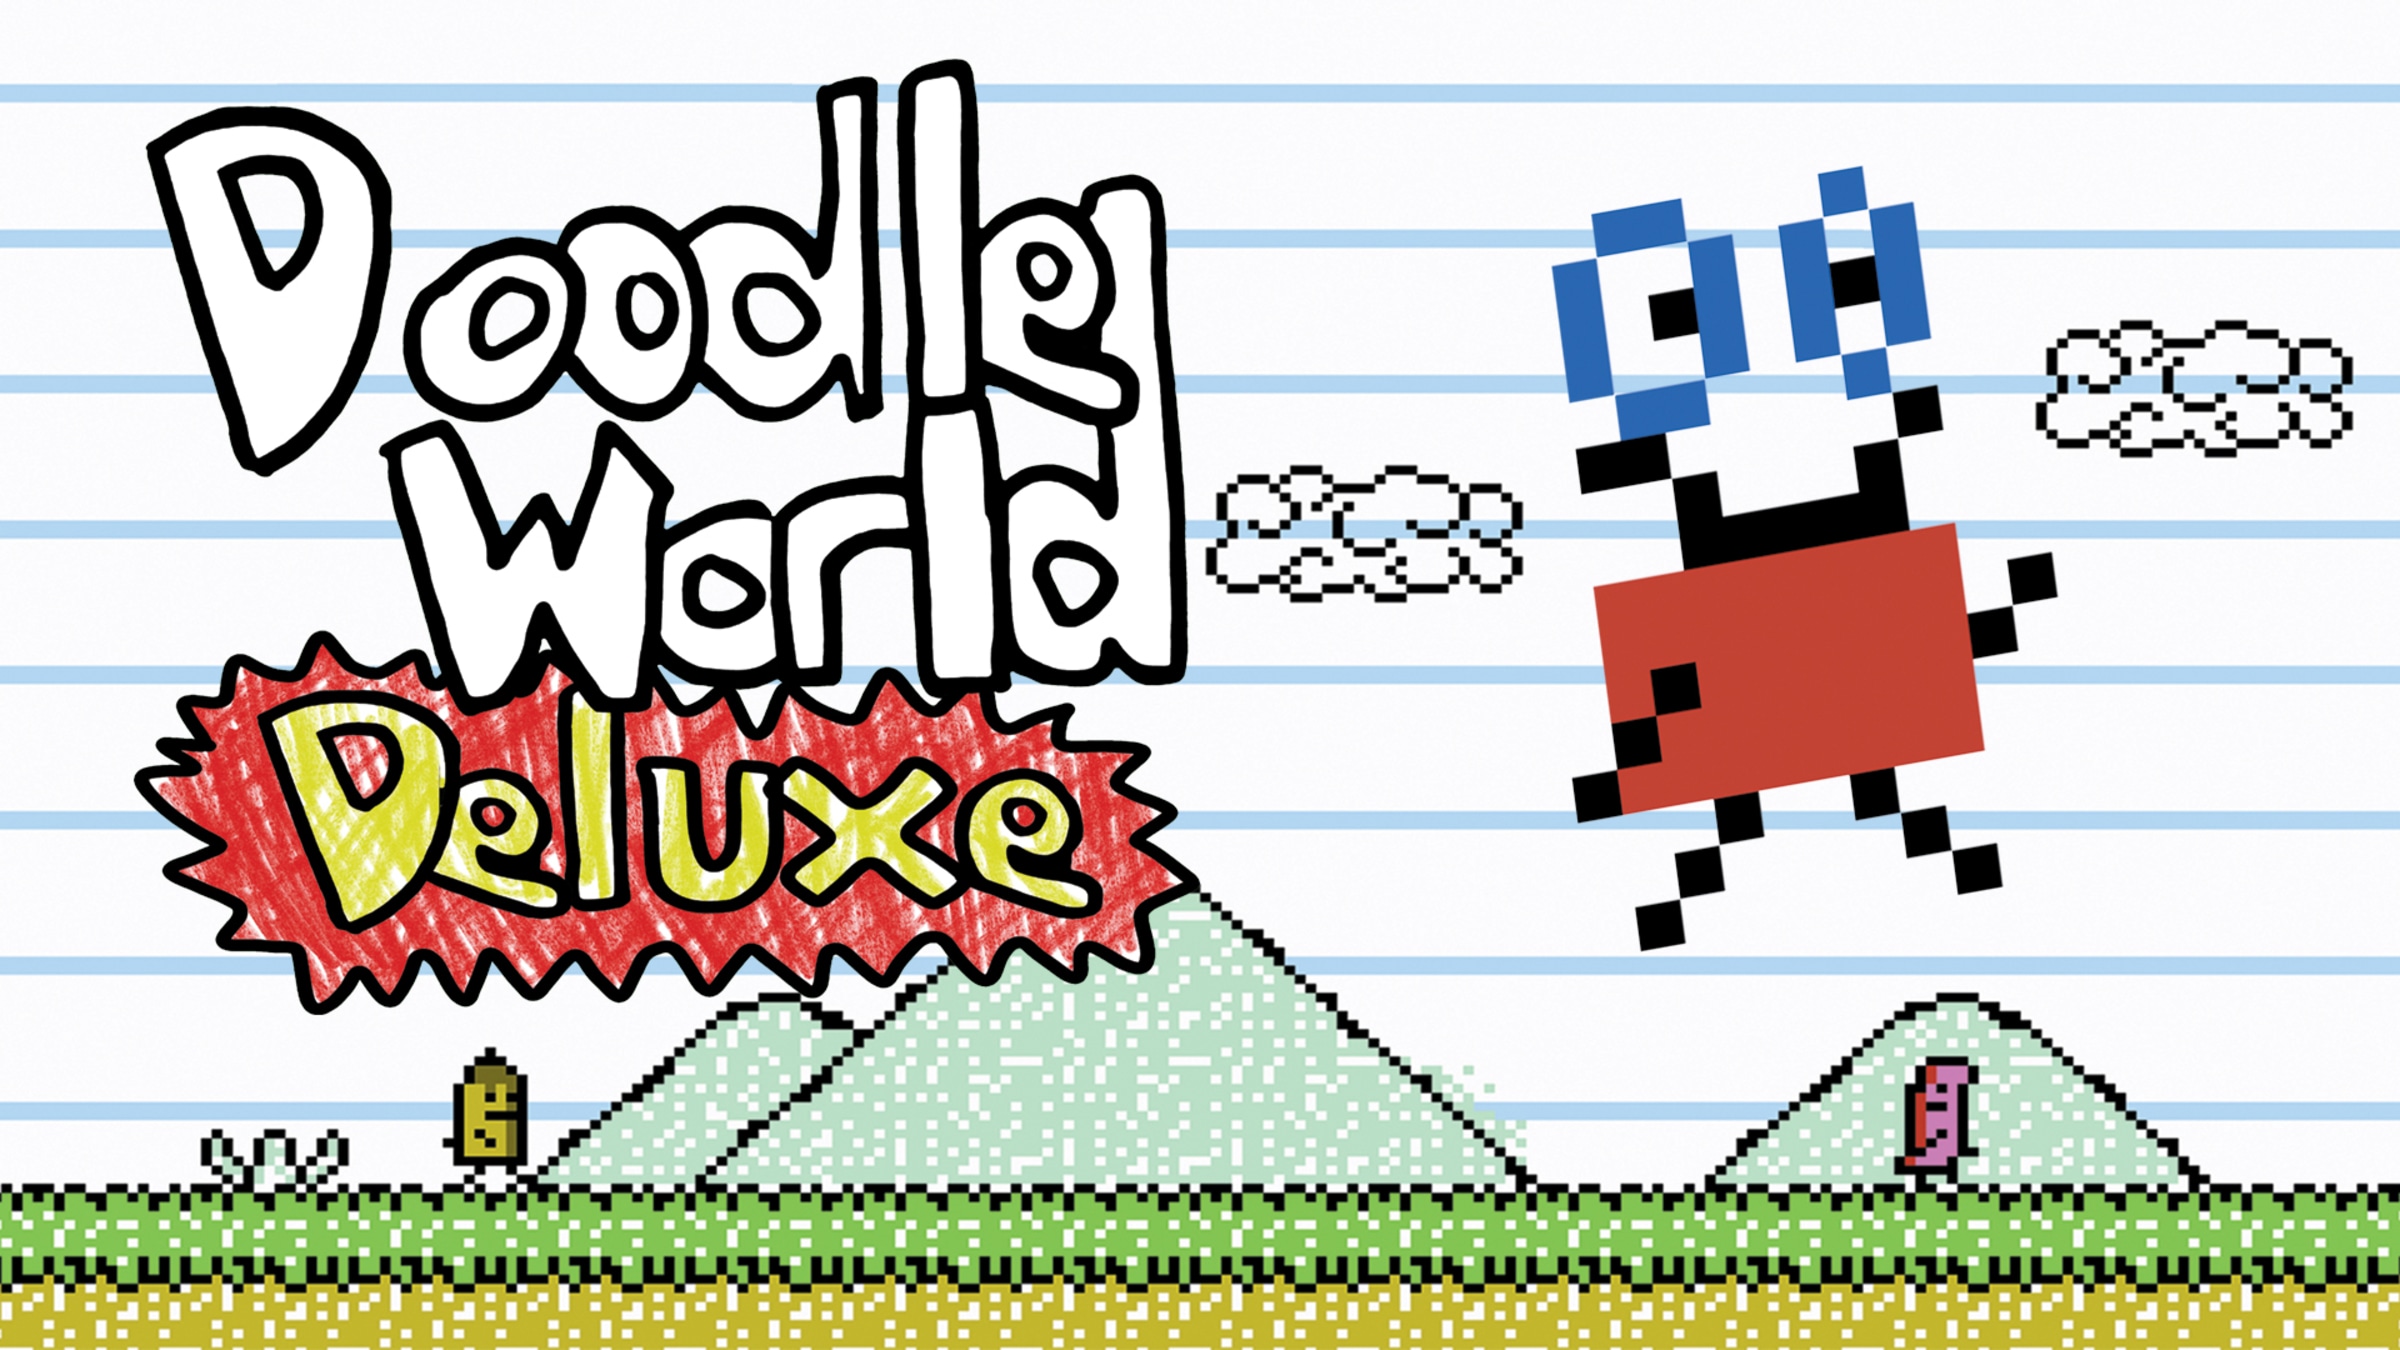 Doodle Games Bundle for Nintendo Switch - Nintendo Official Site